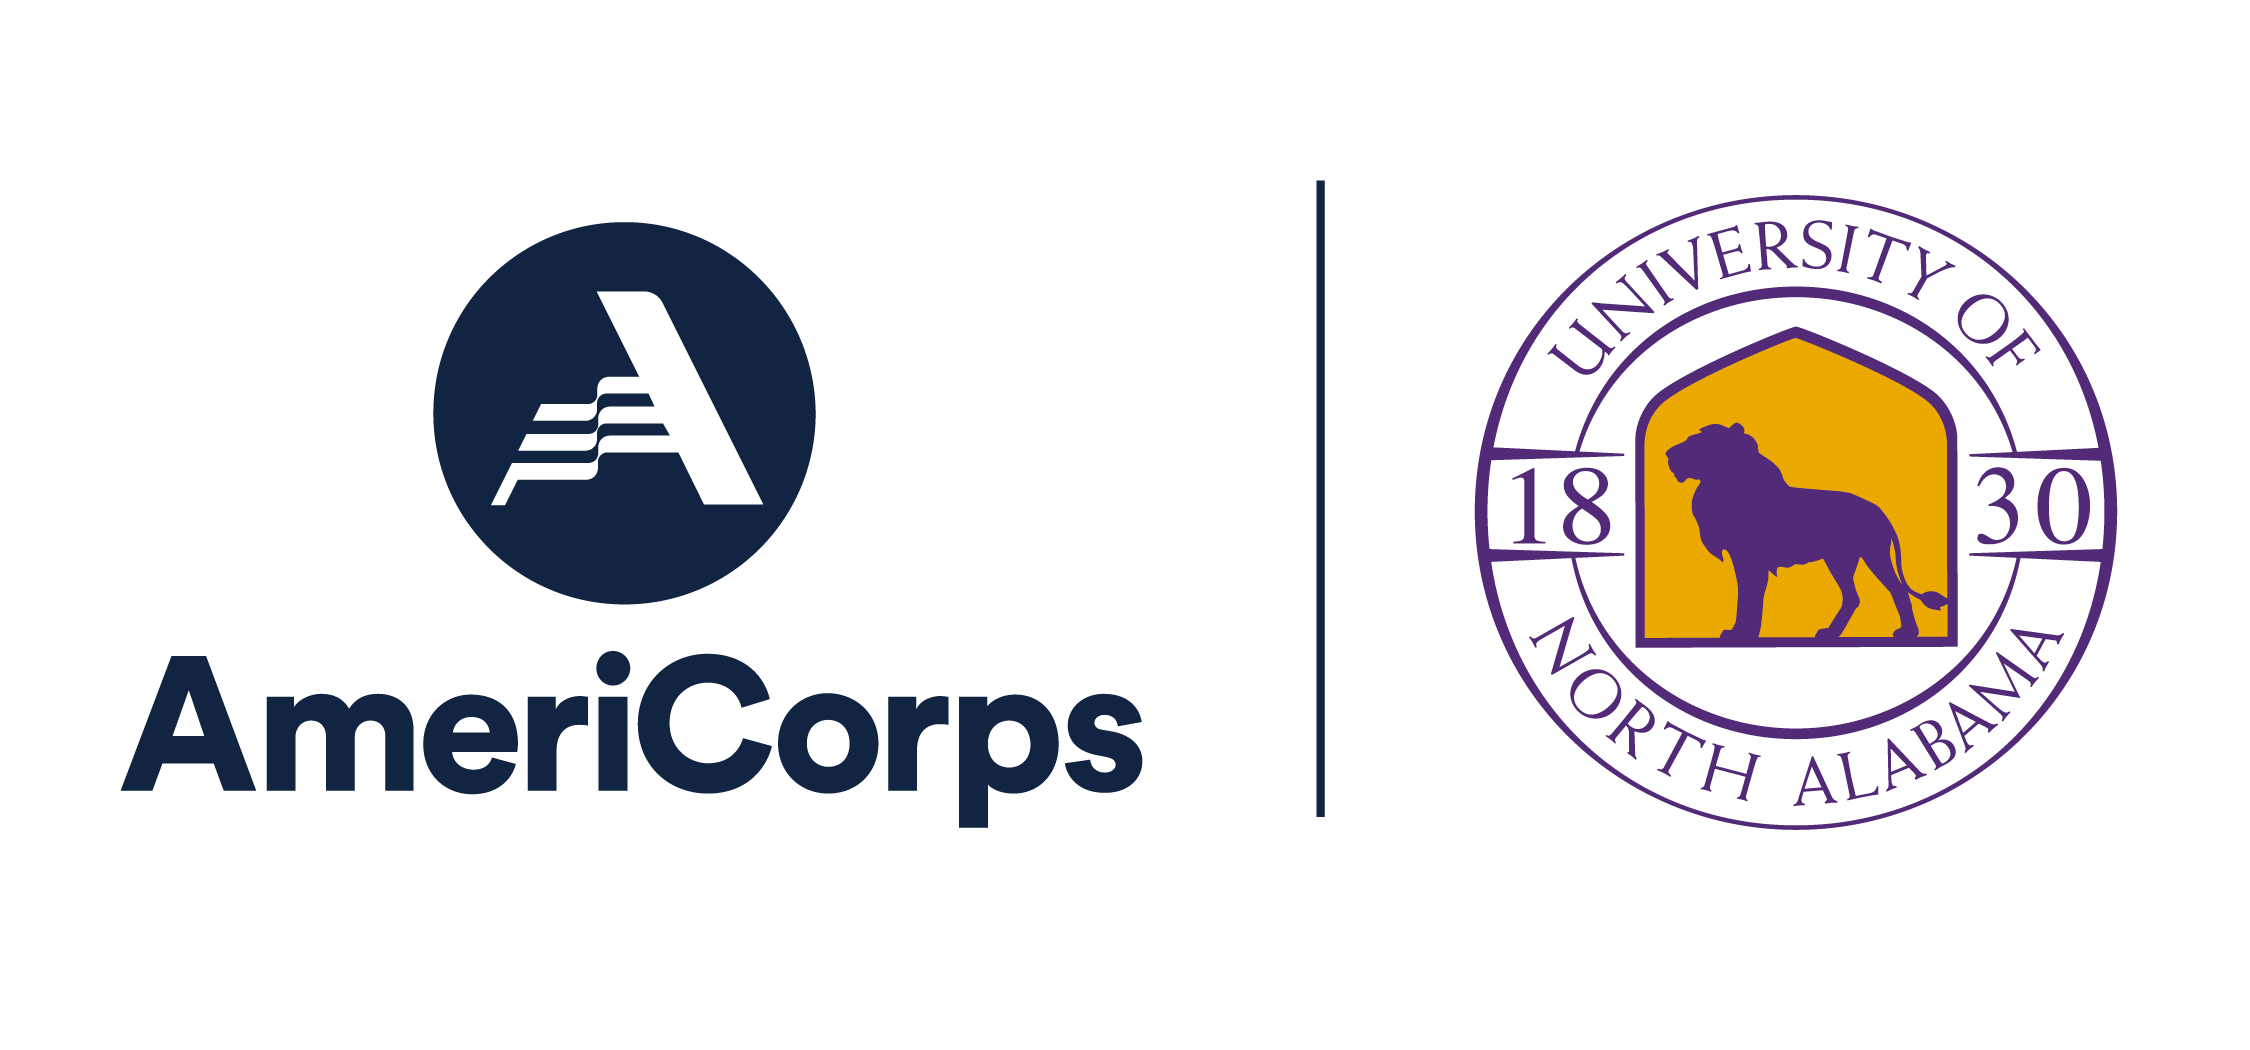 Navy AmeriCorps and University of North Alabama logo